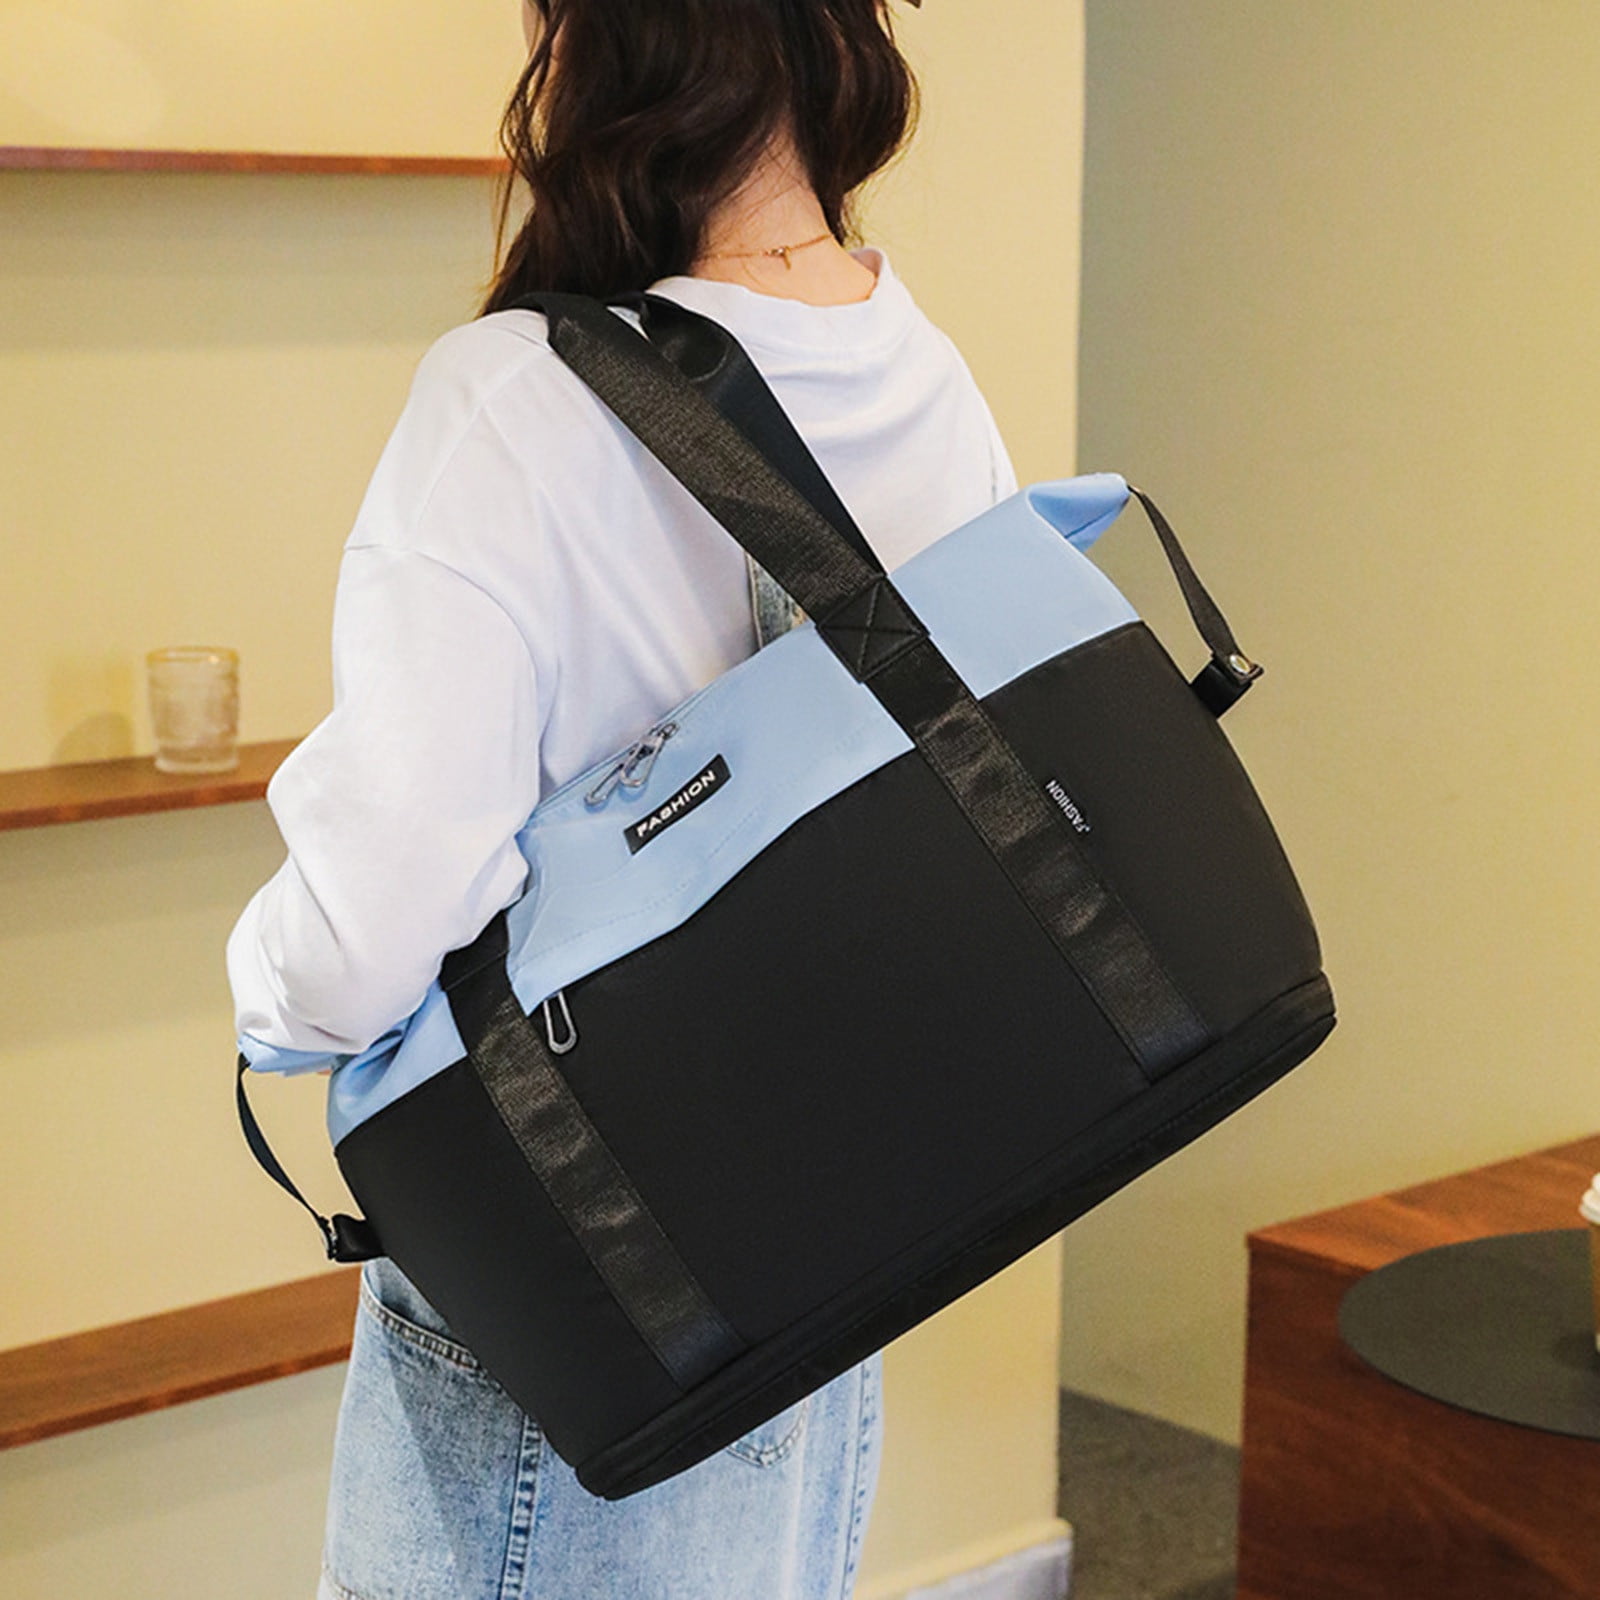 UDIYO Duffel Bags Wear Resistant Smooth Zipper Reusable Gym Bag Sports  Travel Duffel Bags for Training  Walmartcom